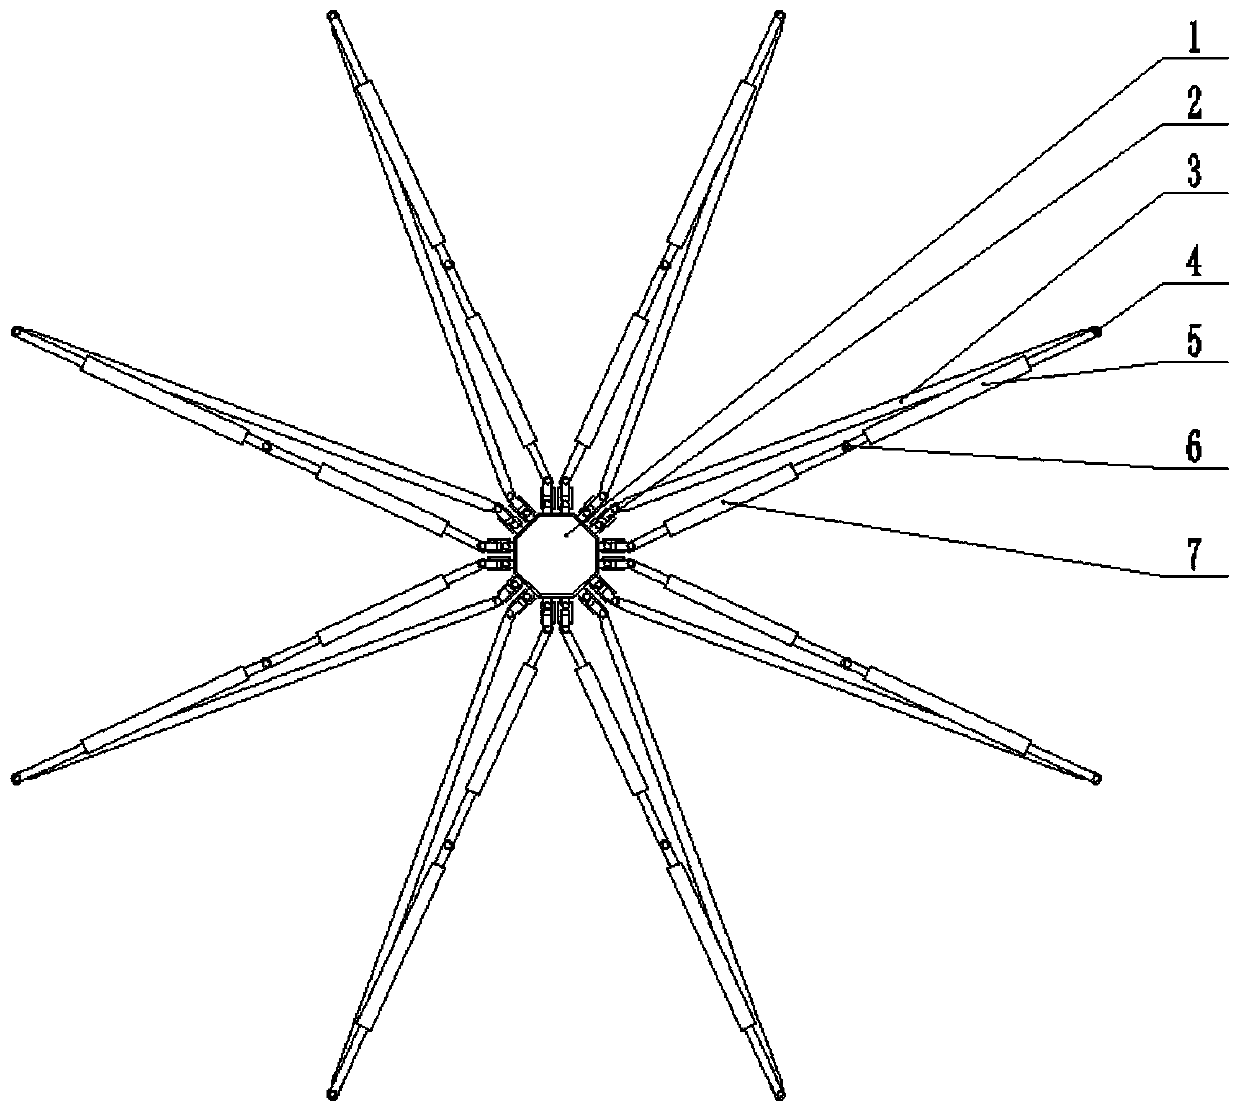 A Space Folding Mechanism Using Six-bar Mechanism as Expandable Unit